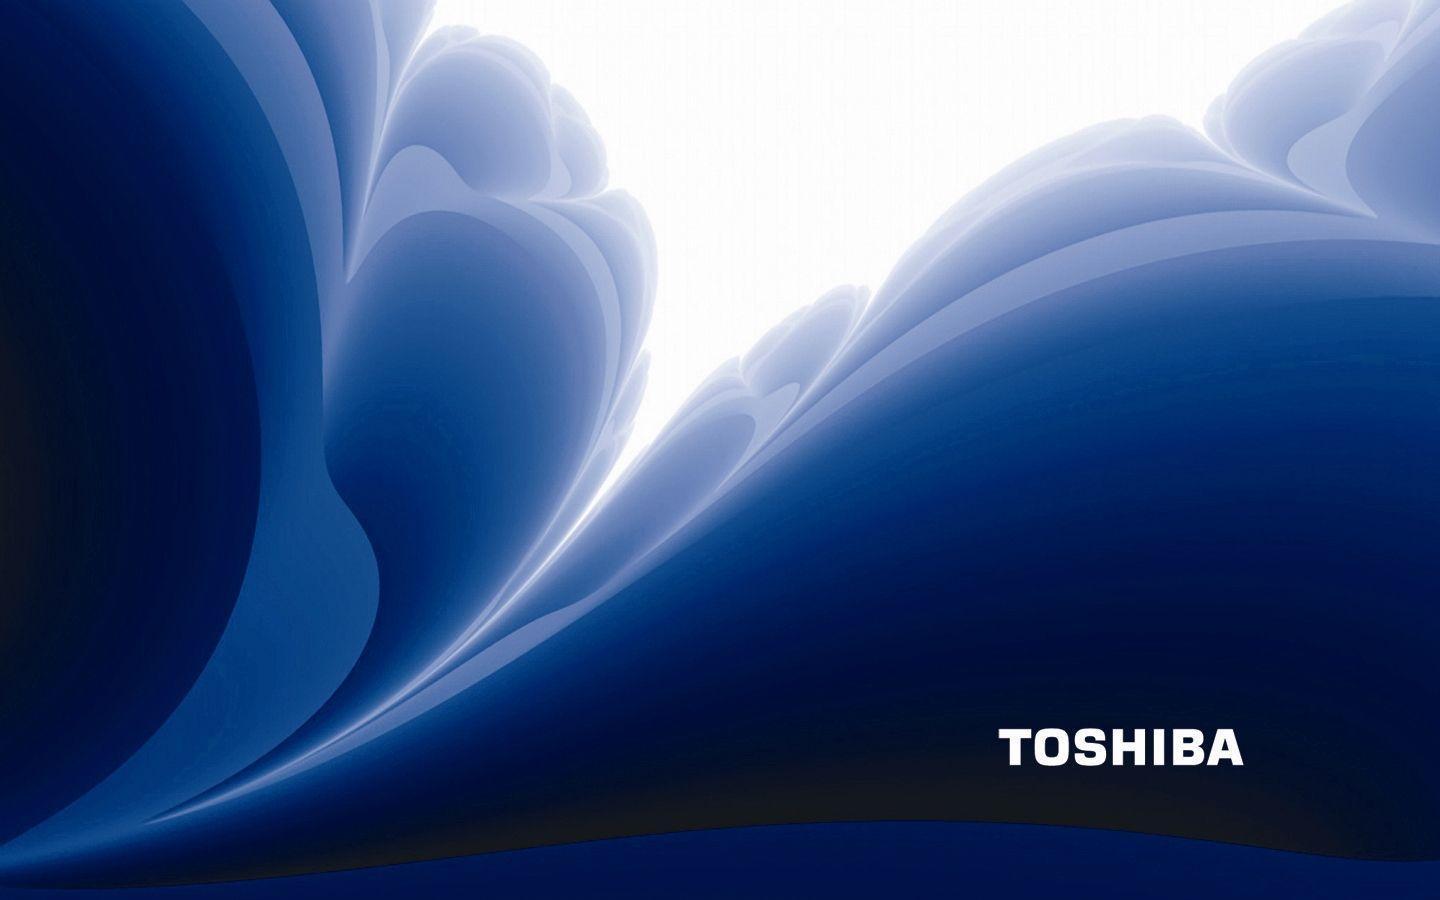 Toshiba Laptop Background. Best Free Wallpaper